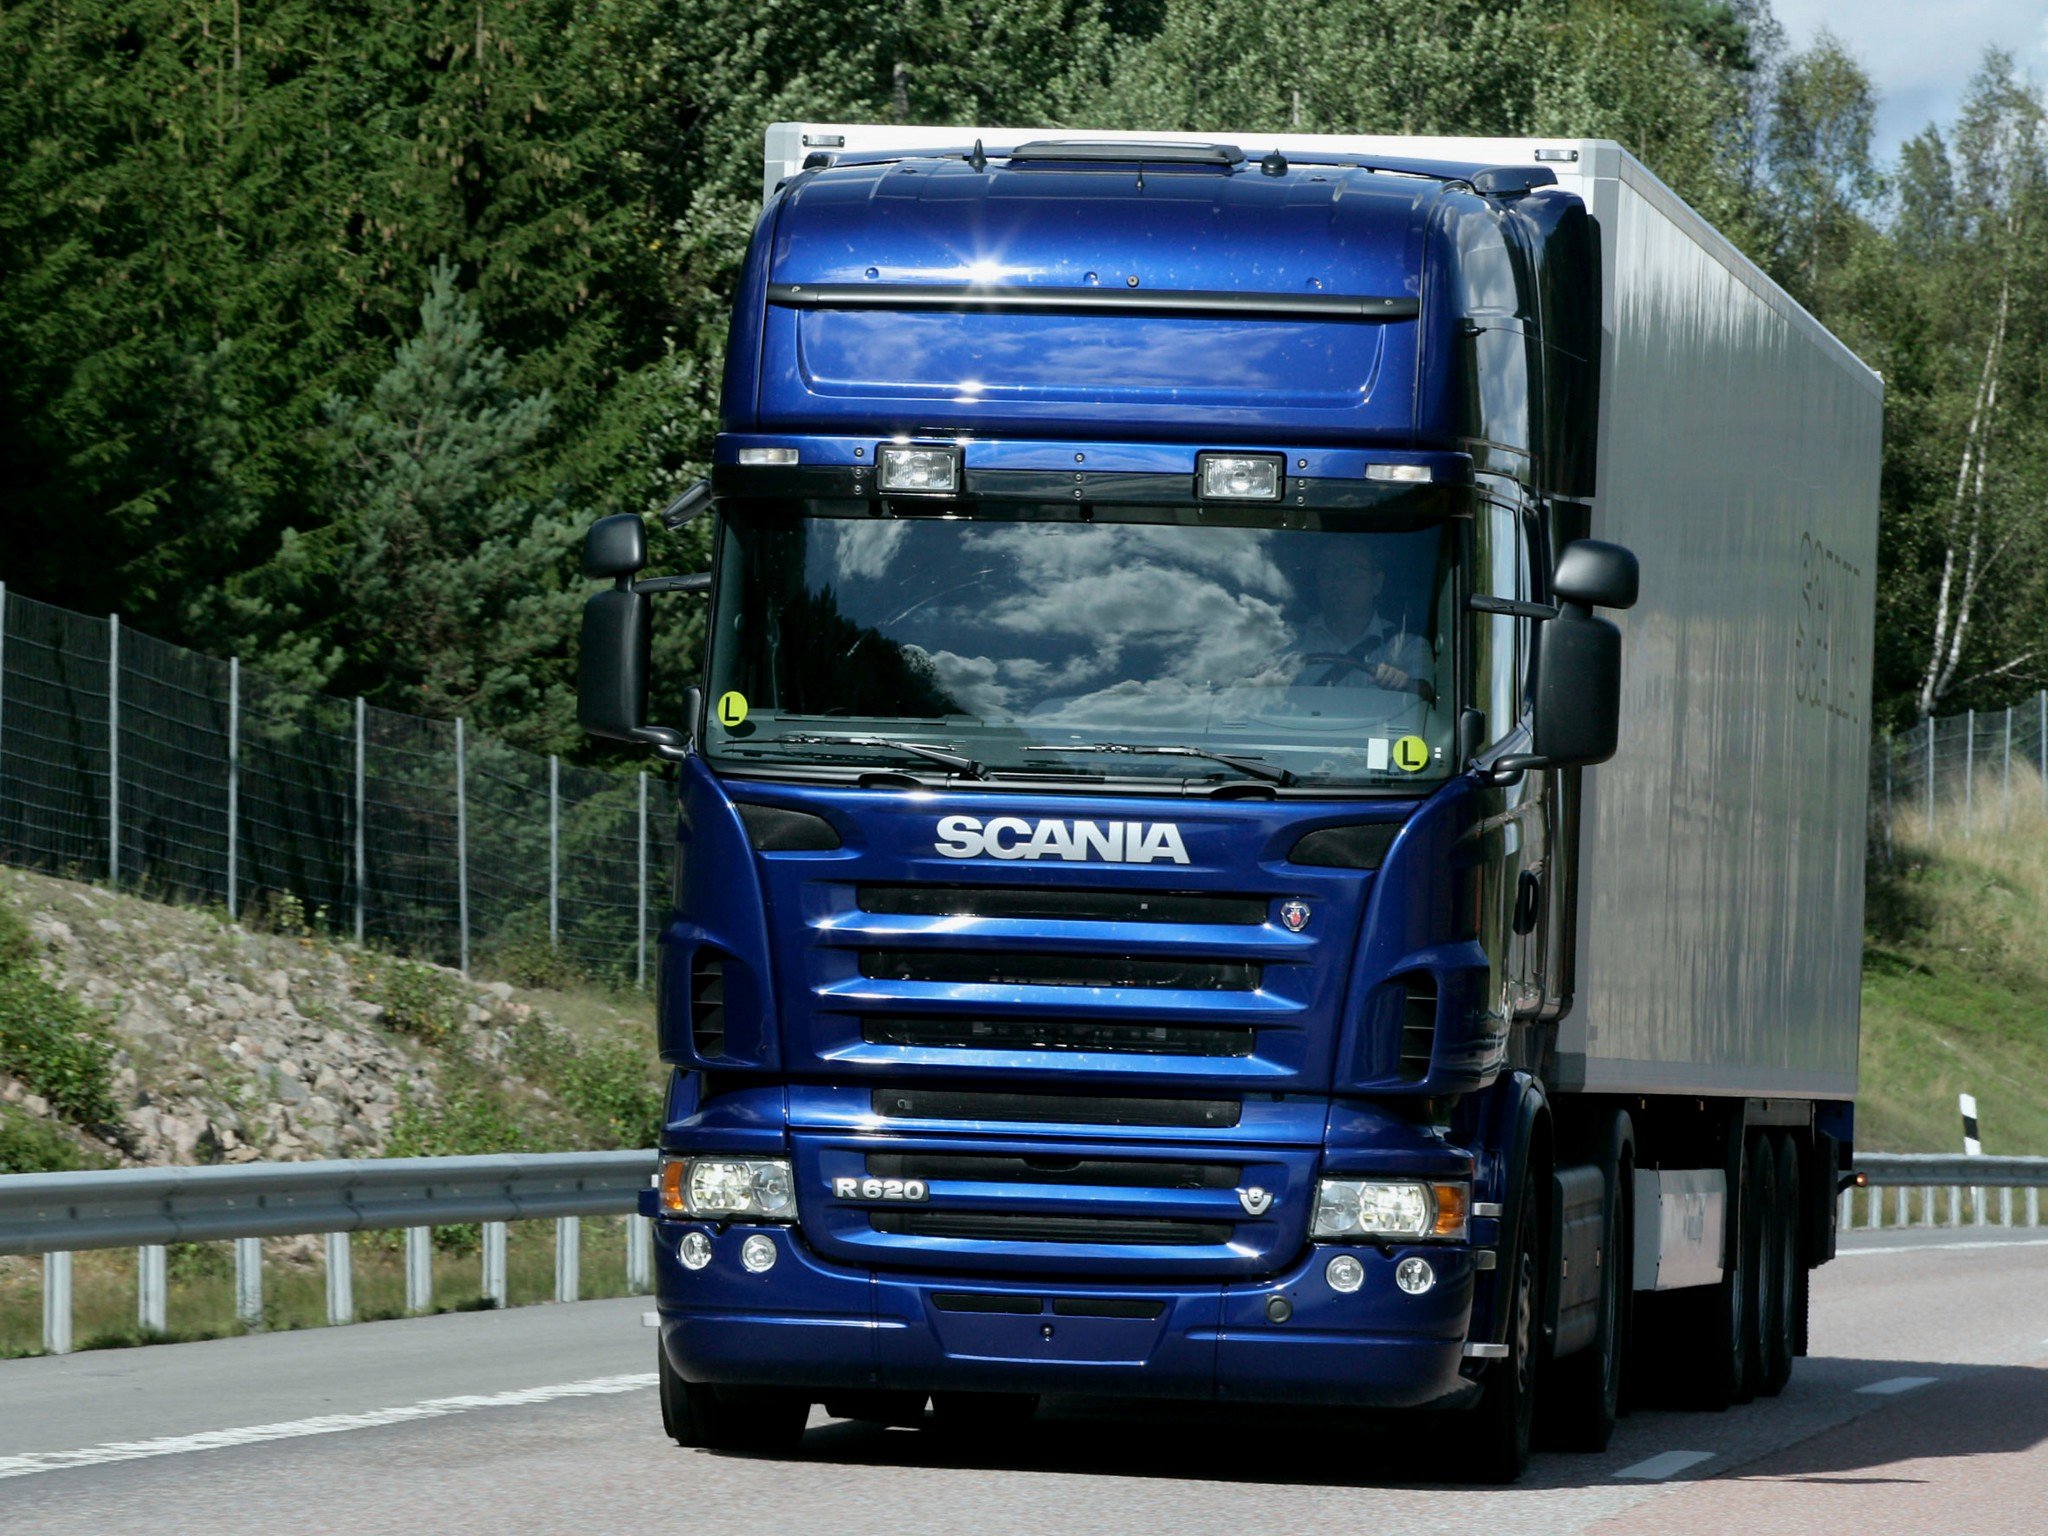 2005 09, Scania, R620, 4x2, Topline, Semi, Tractor Wallpaper